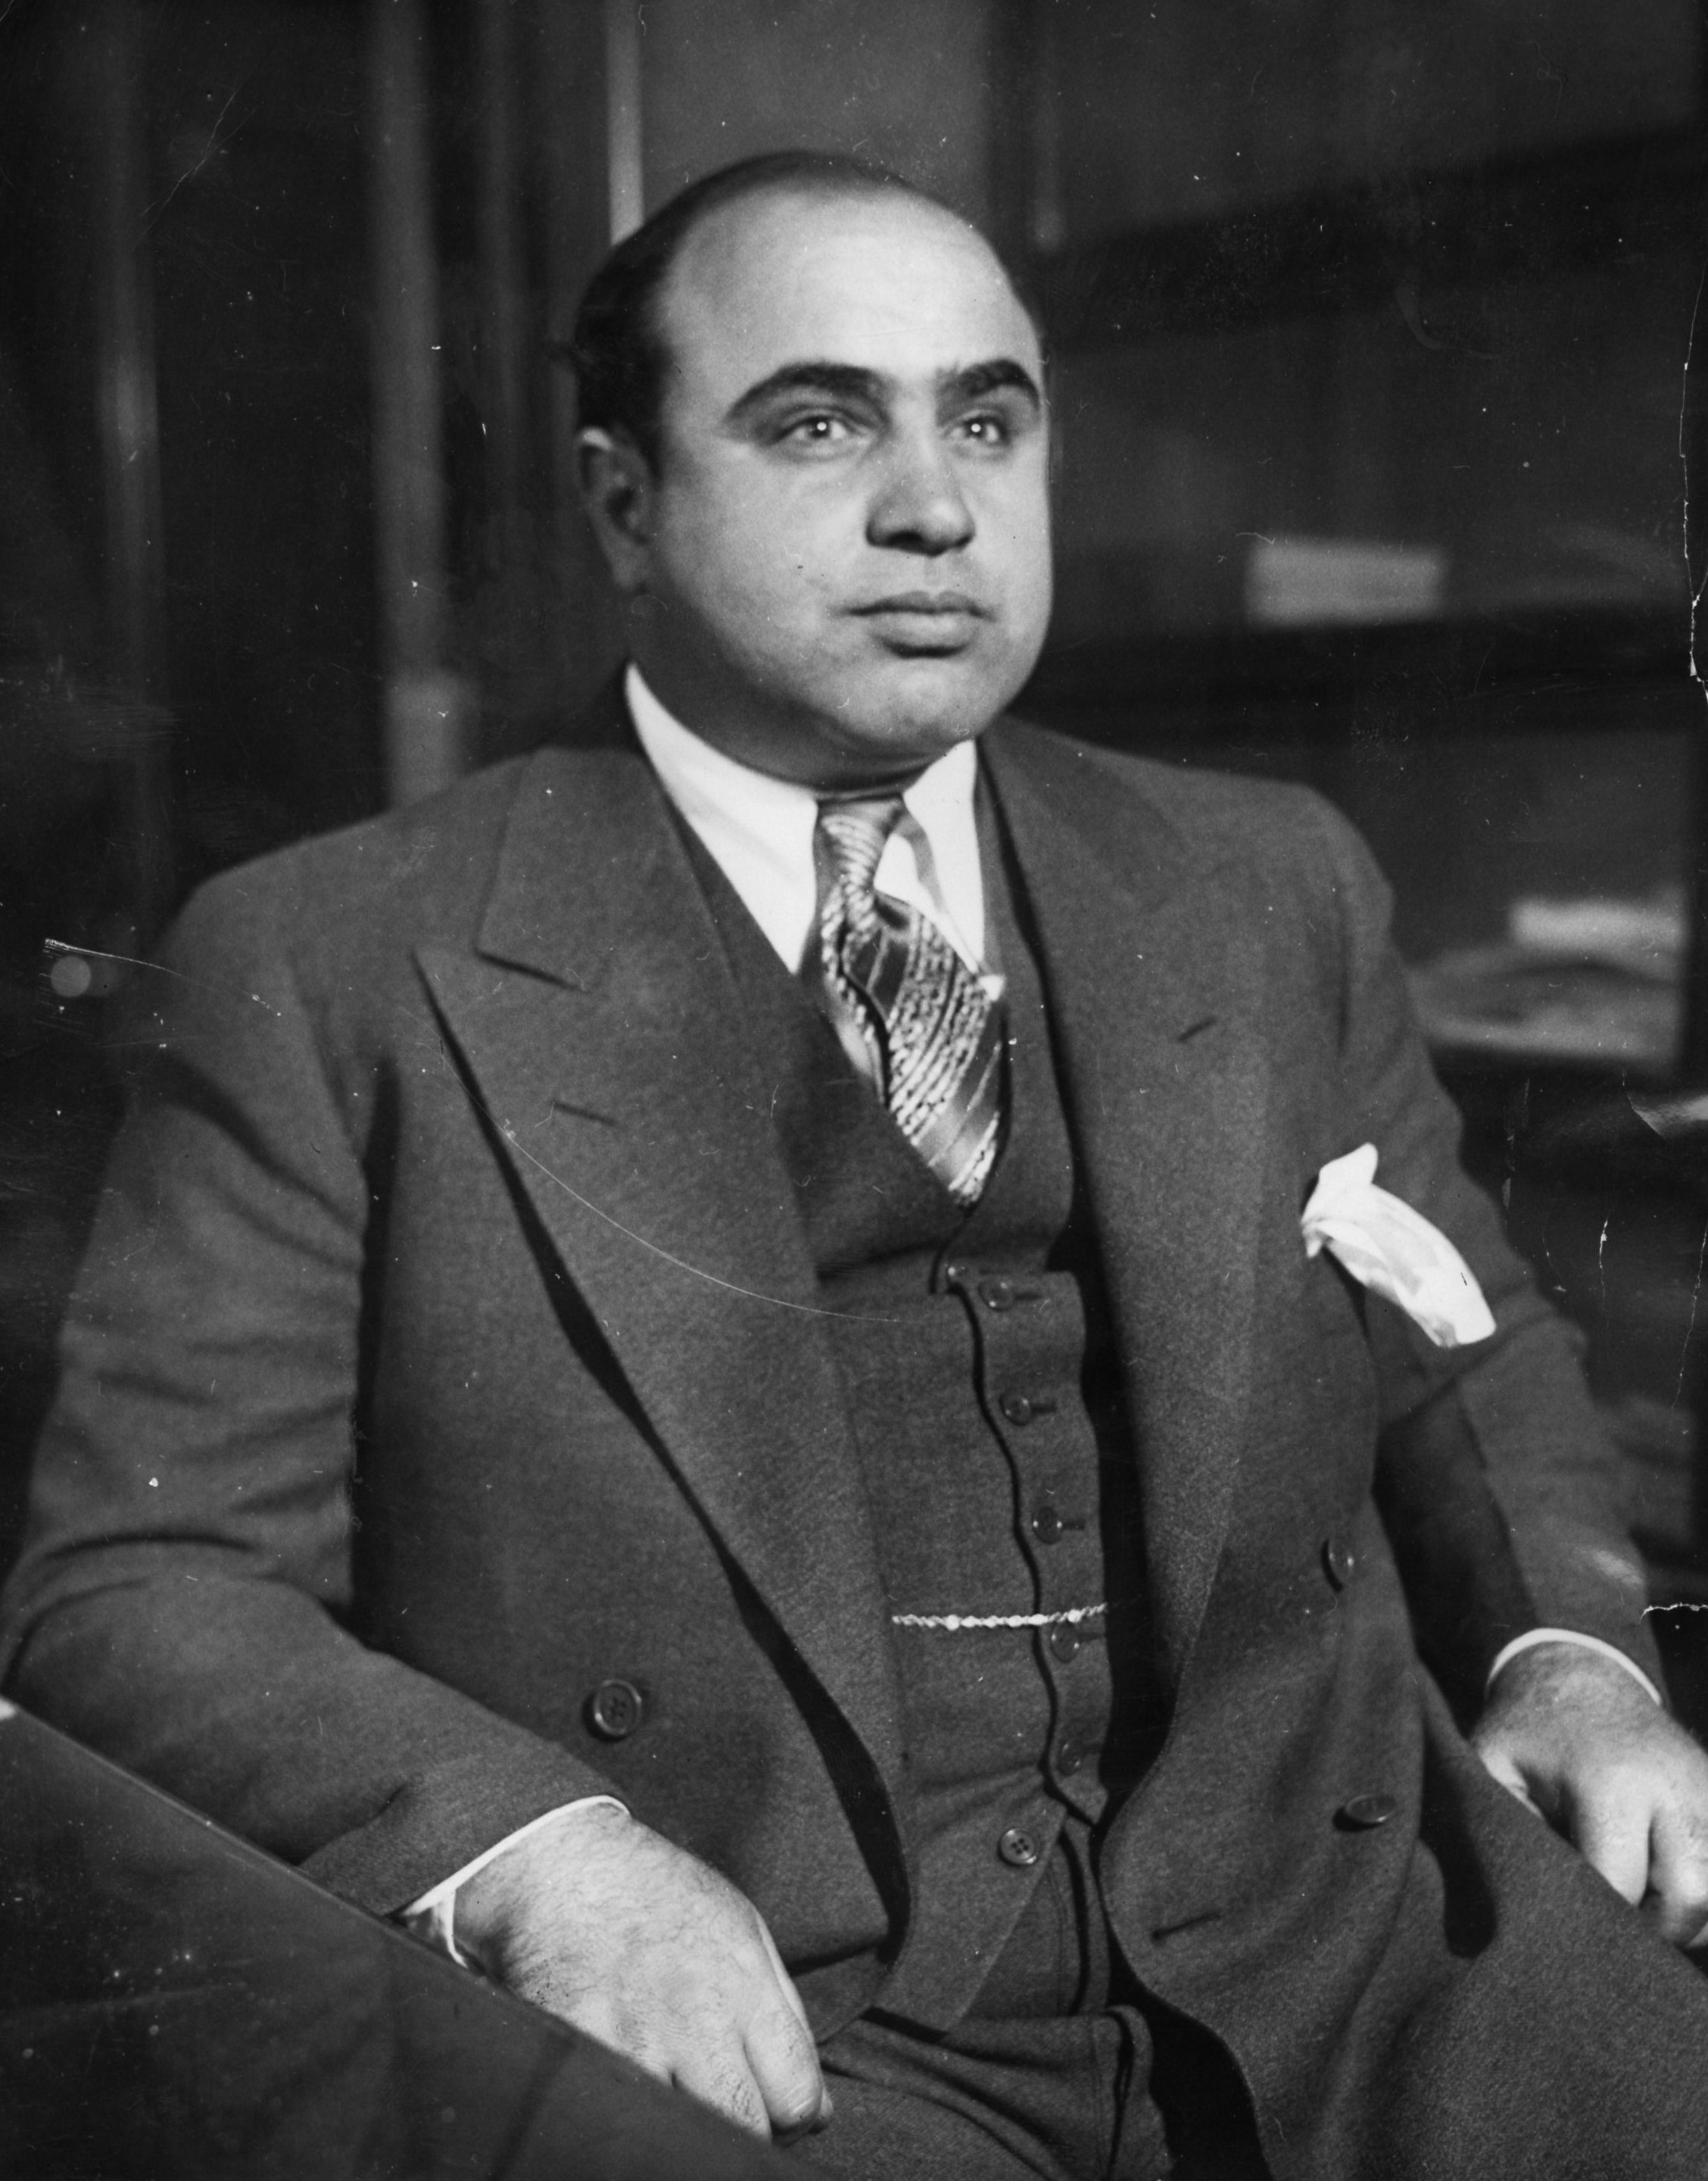 Al Capone, American mob boss (d. 1947) was born on January 17, 1899.